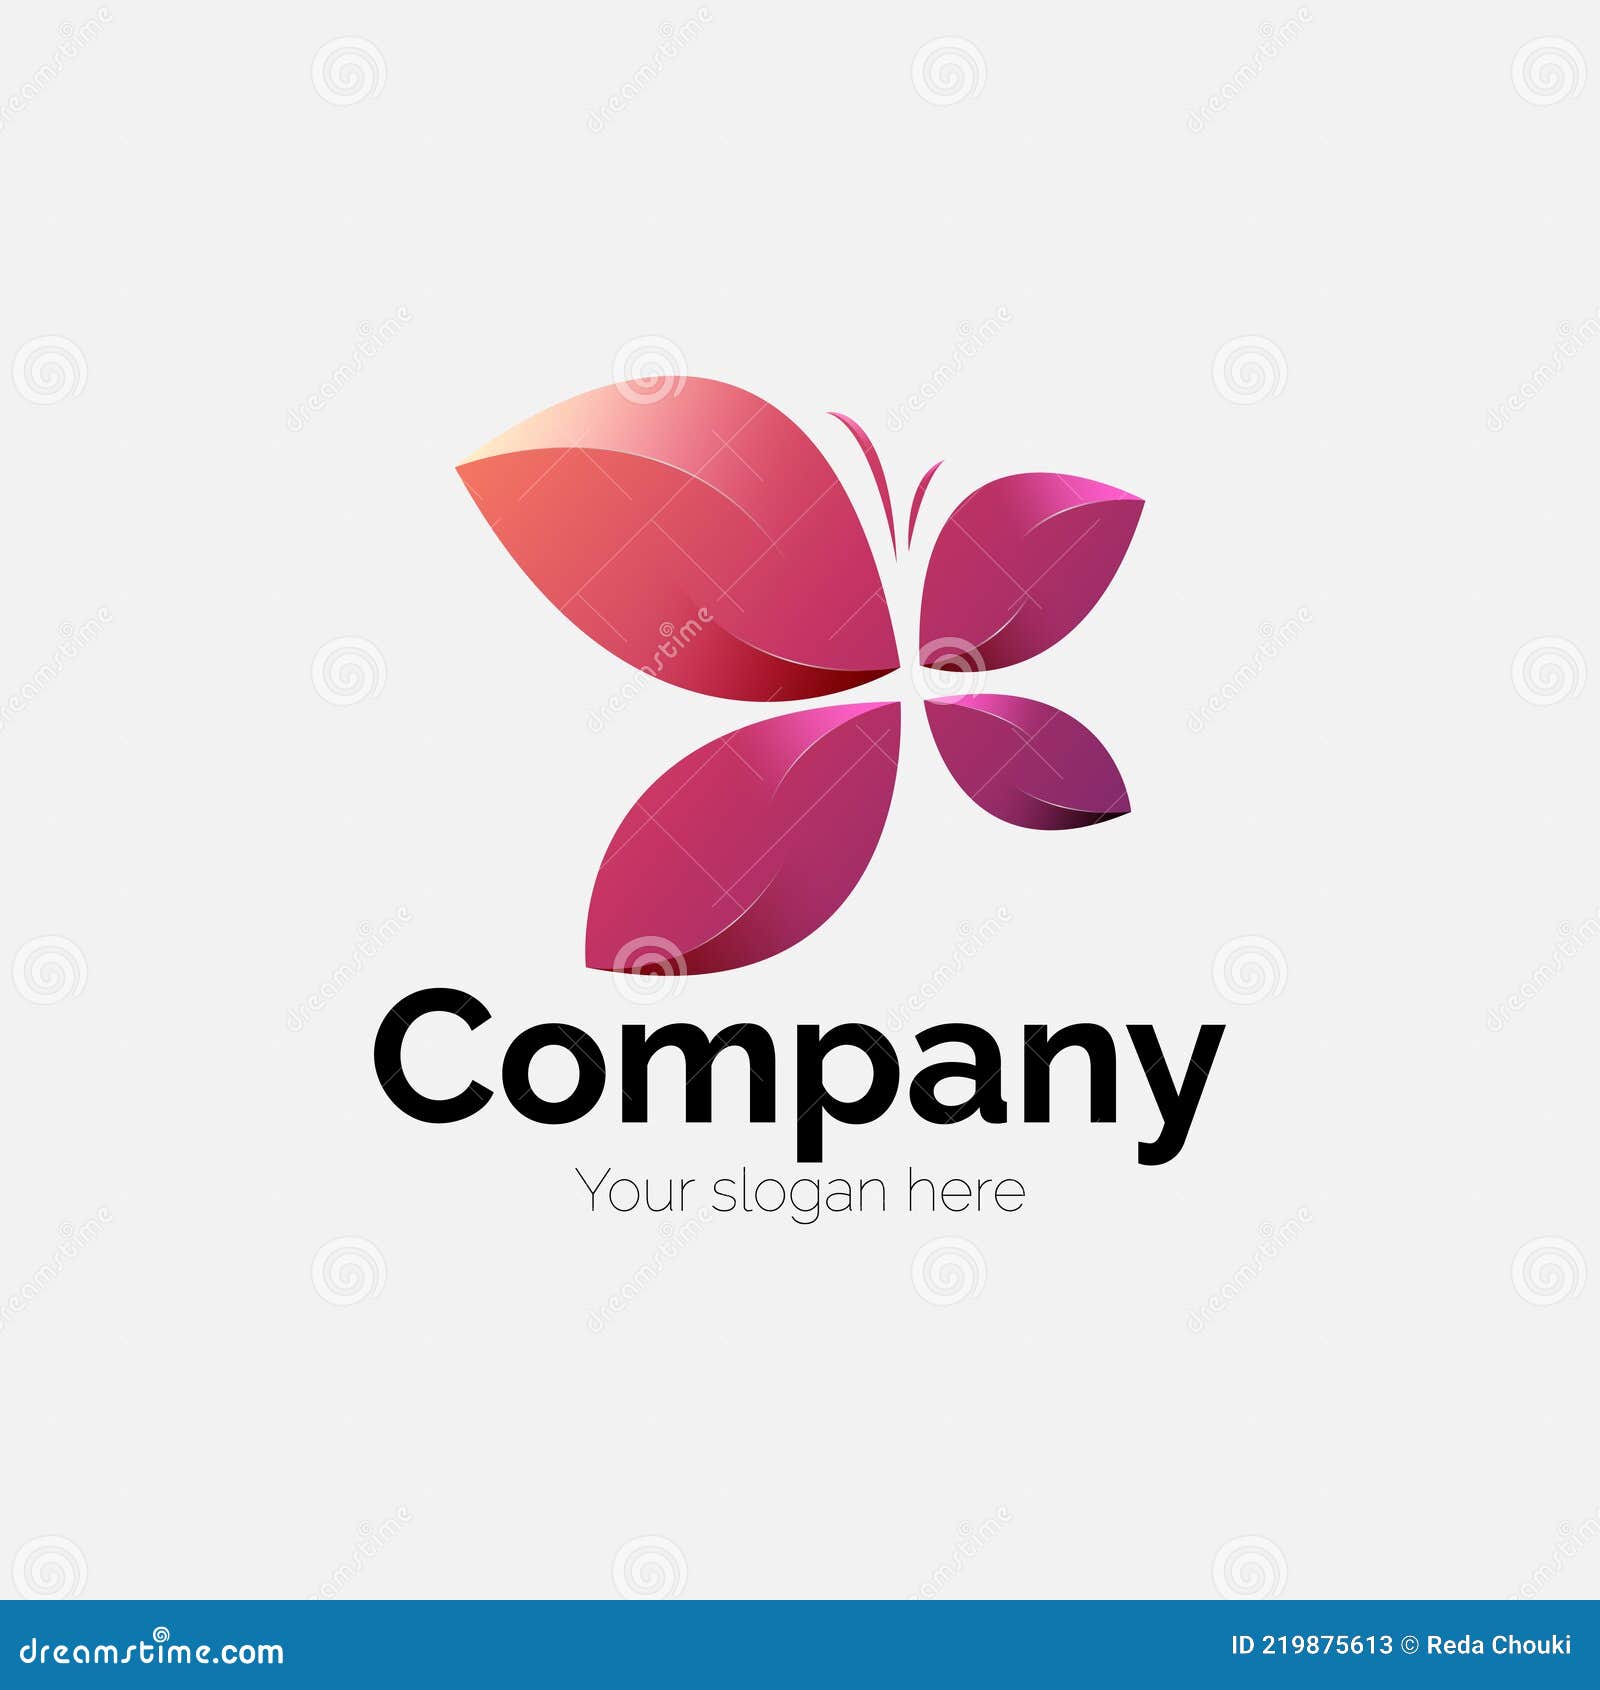 butterfly logo, gradient logo, butterfly,  logo, modern, graphic , entreprise logo, business, pinkpurple gradient, spa